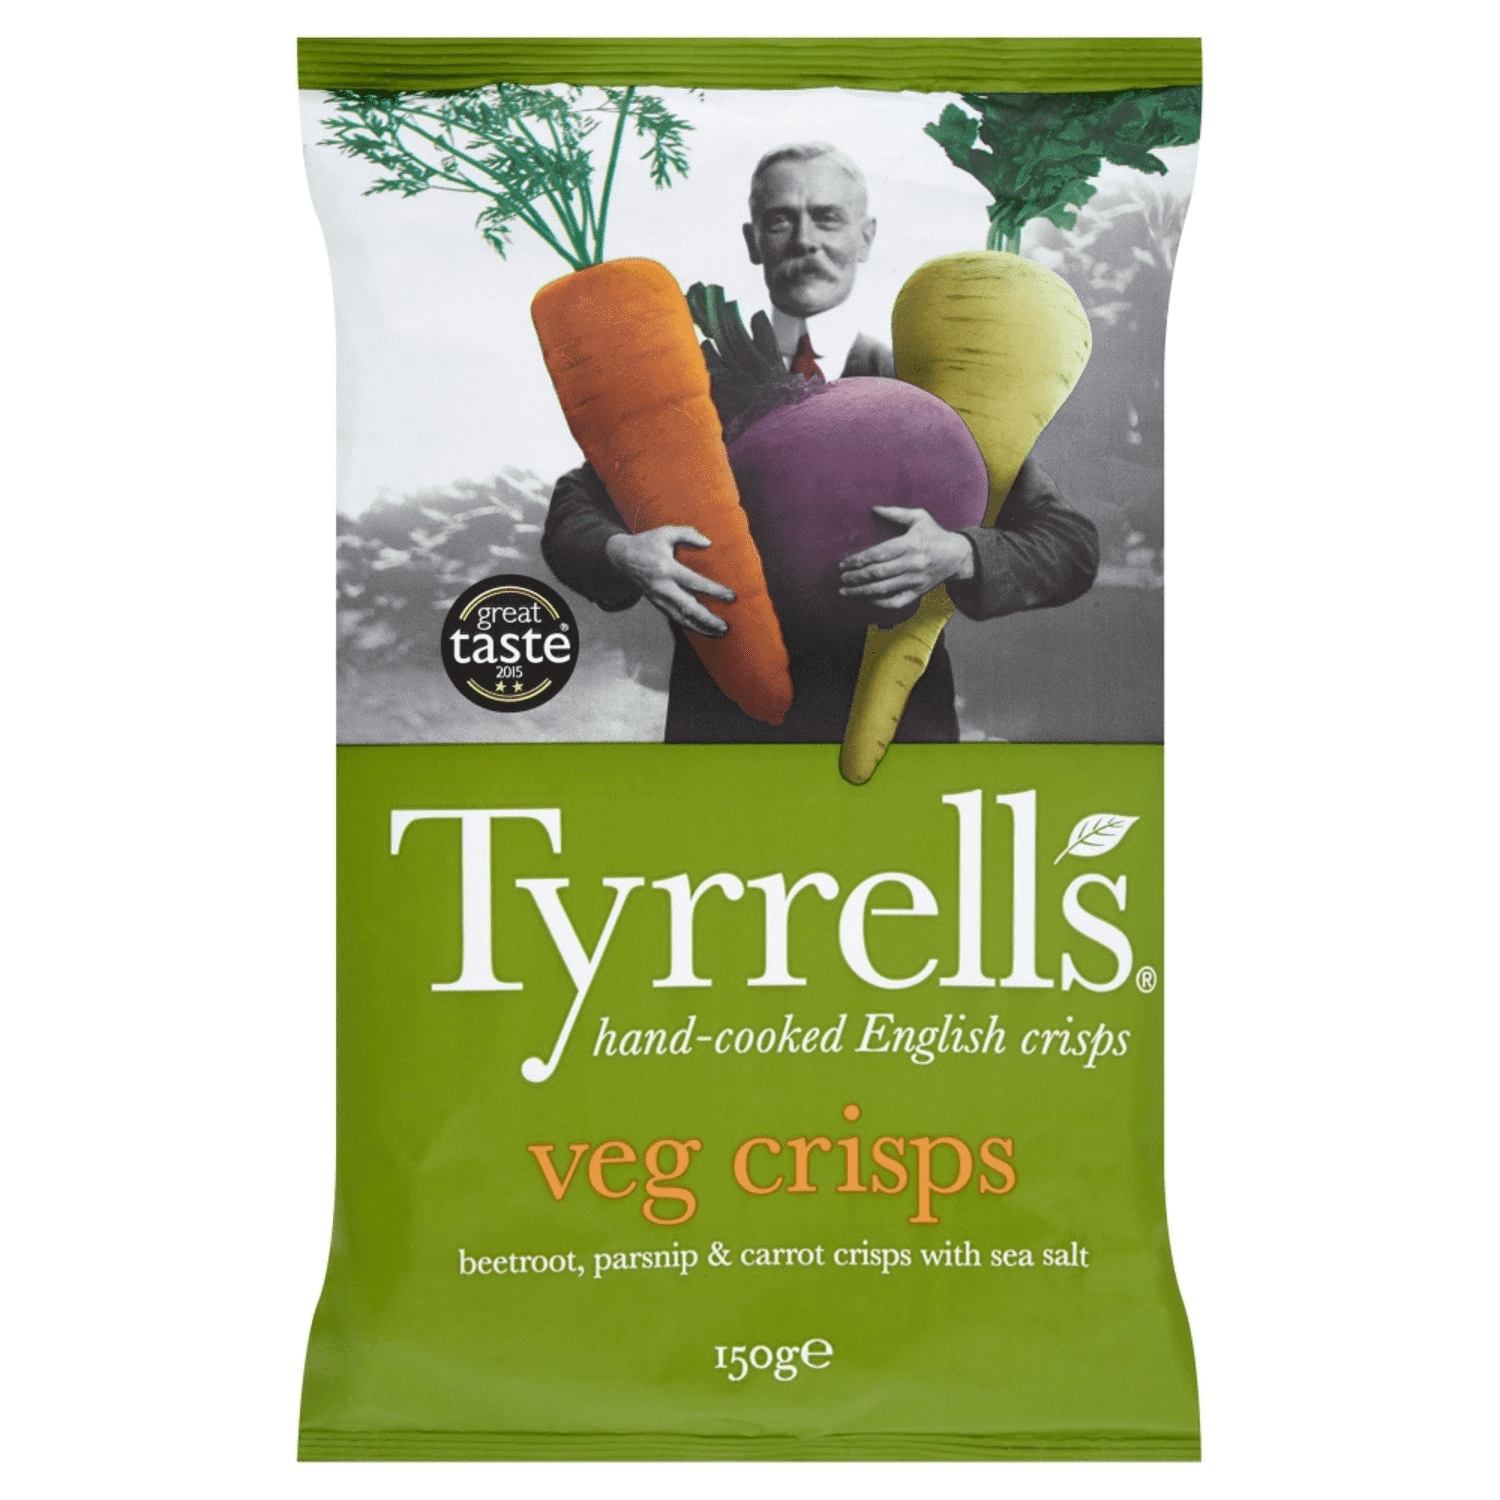 Chips Veg Crisps de legumbres, 150g - TYRRELL'S